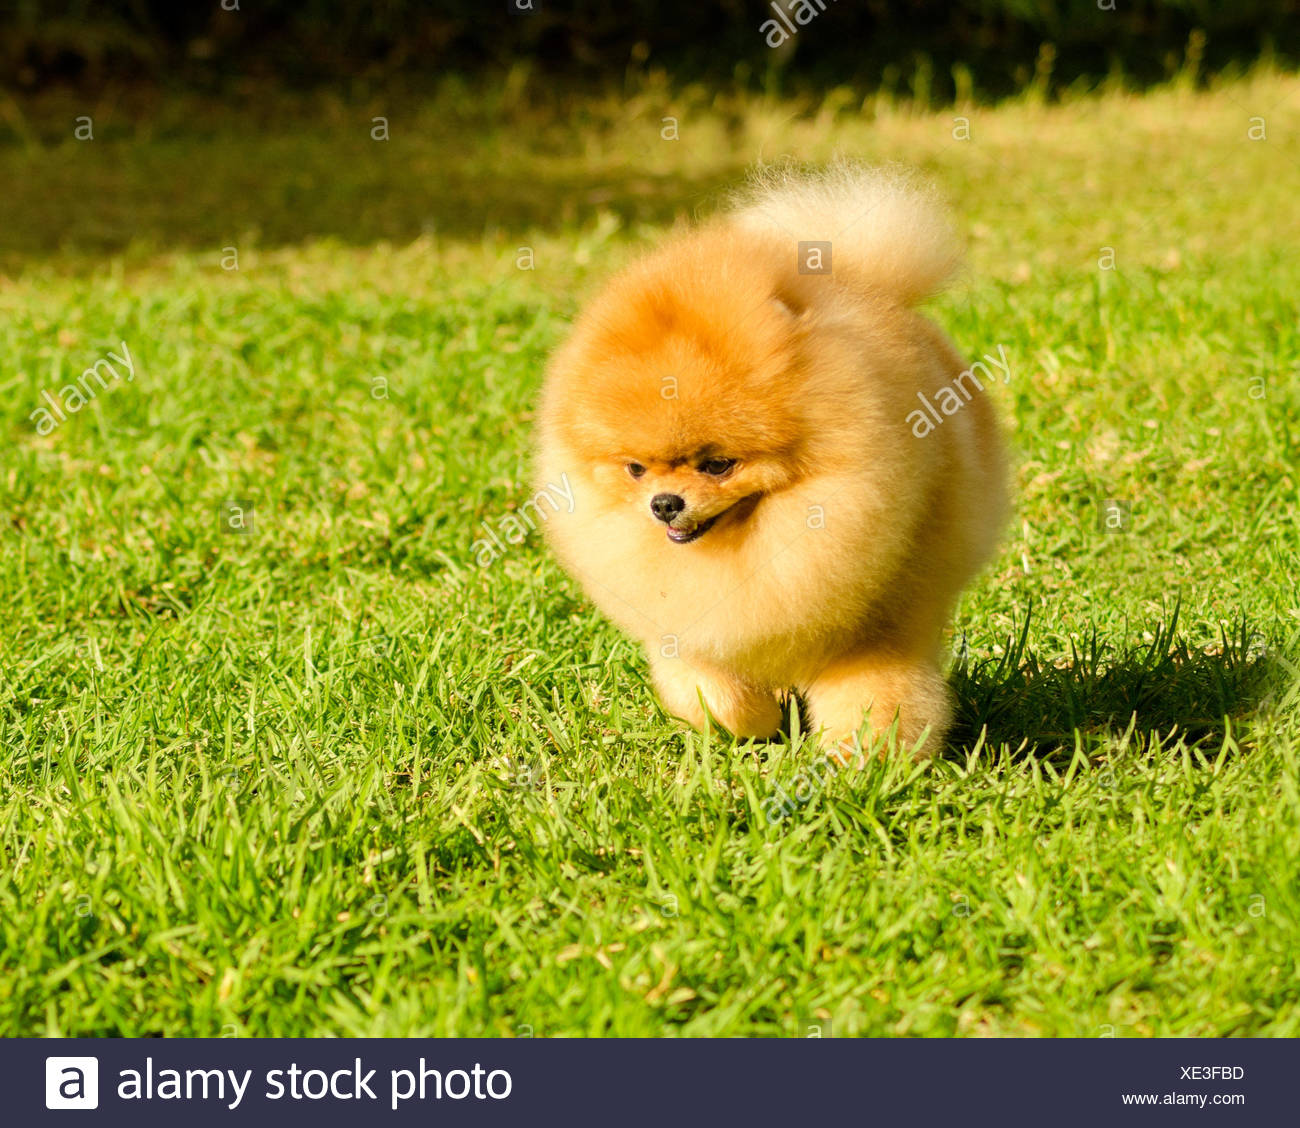 small orange dog